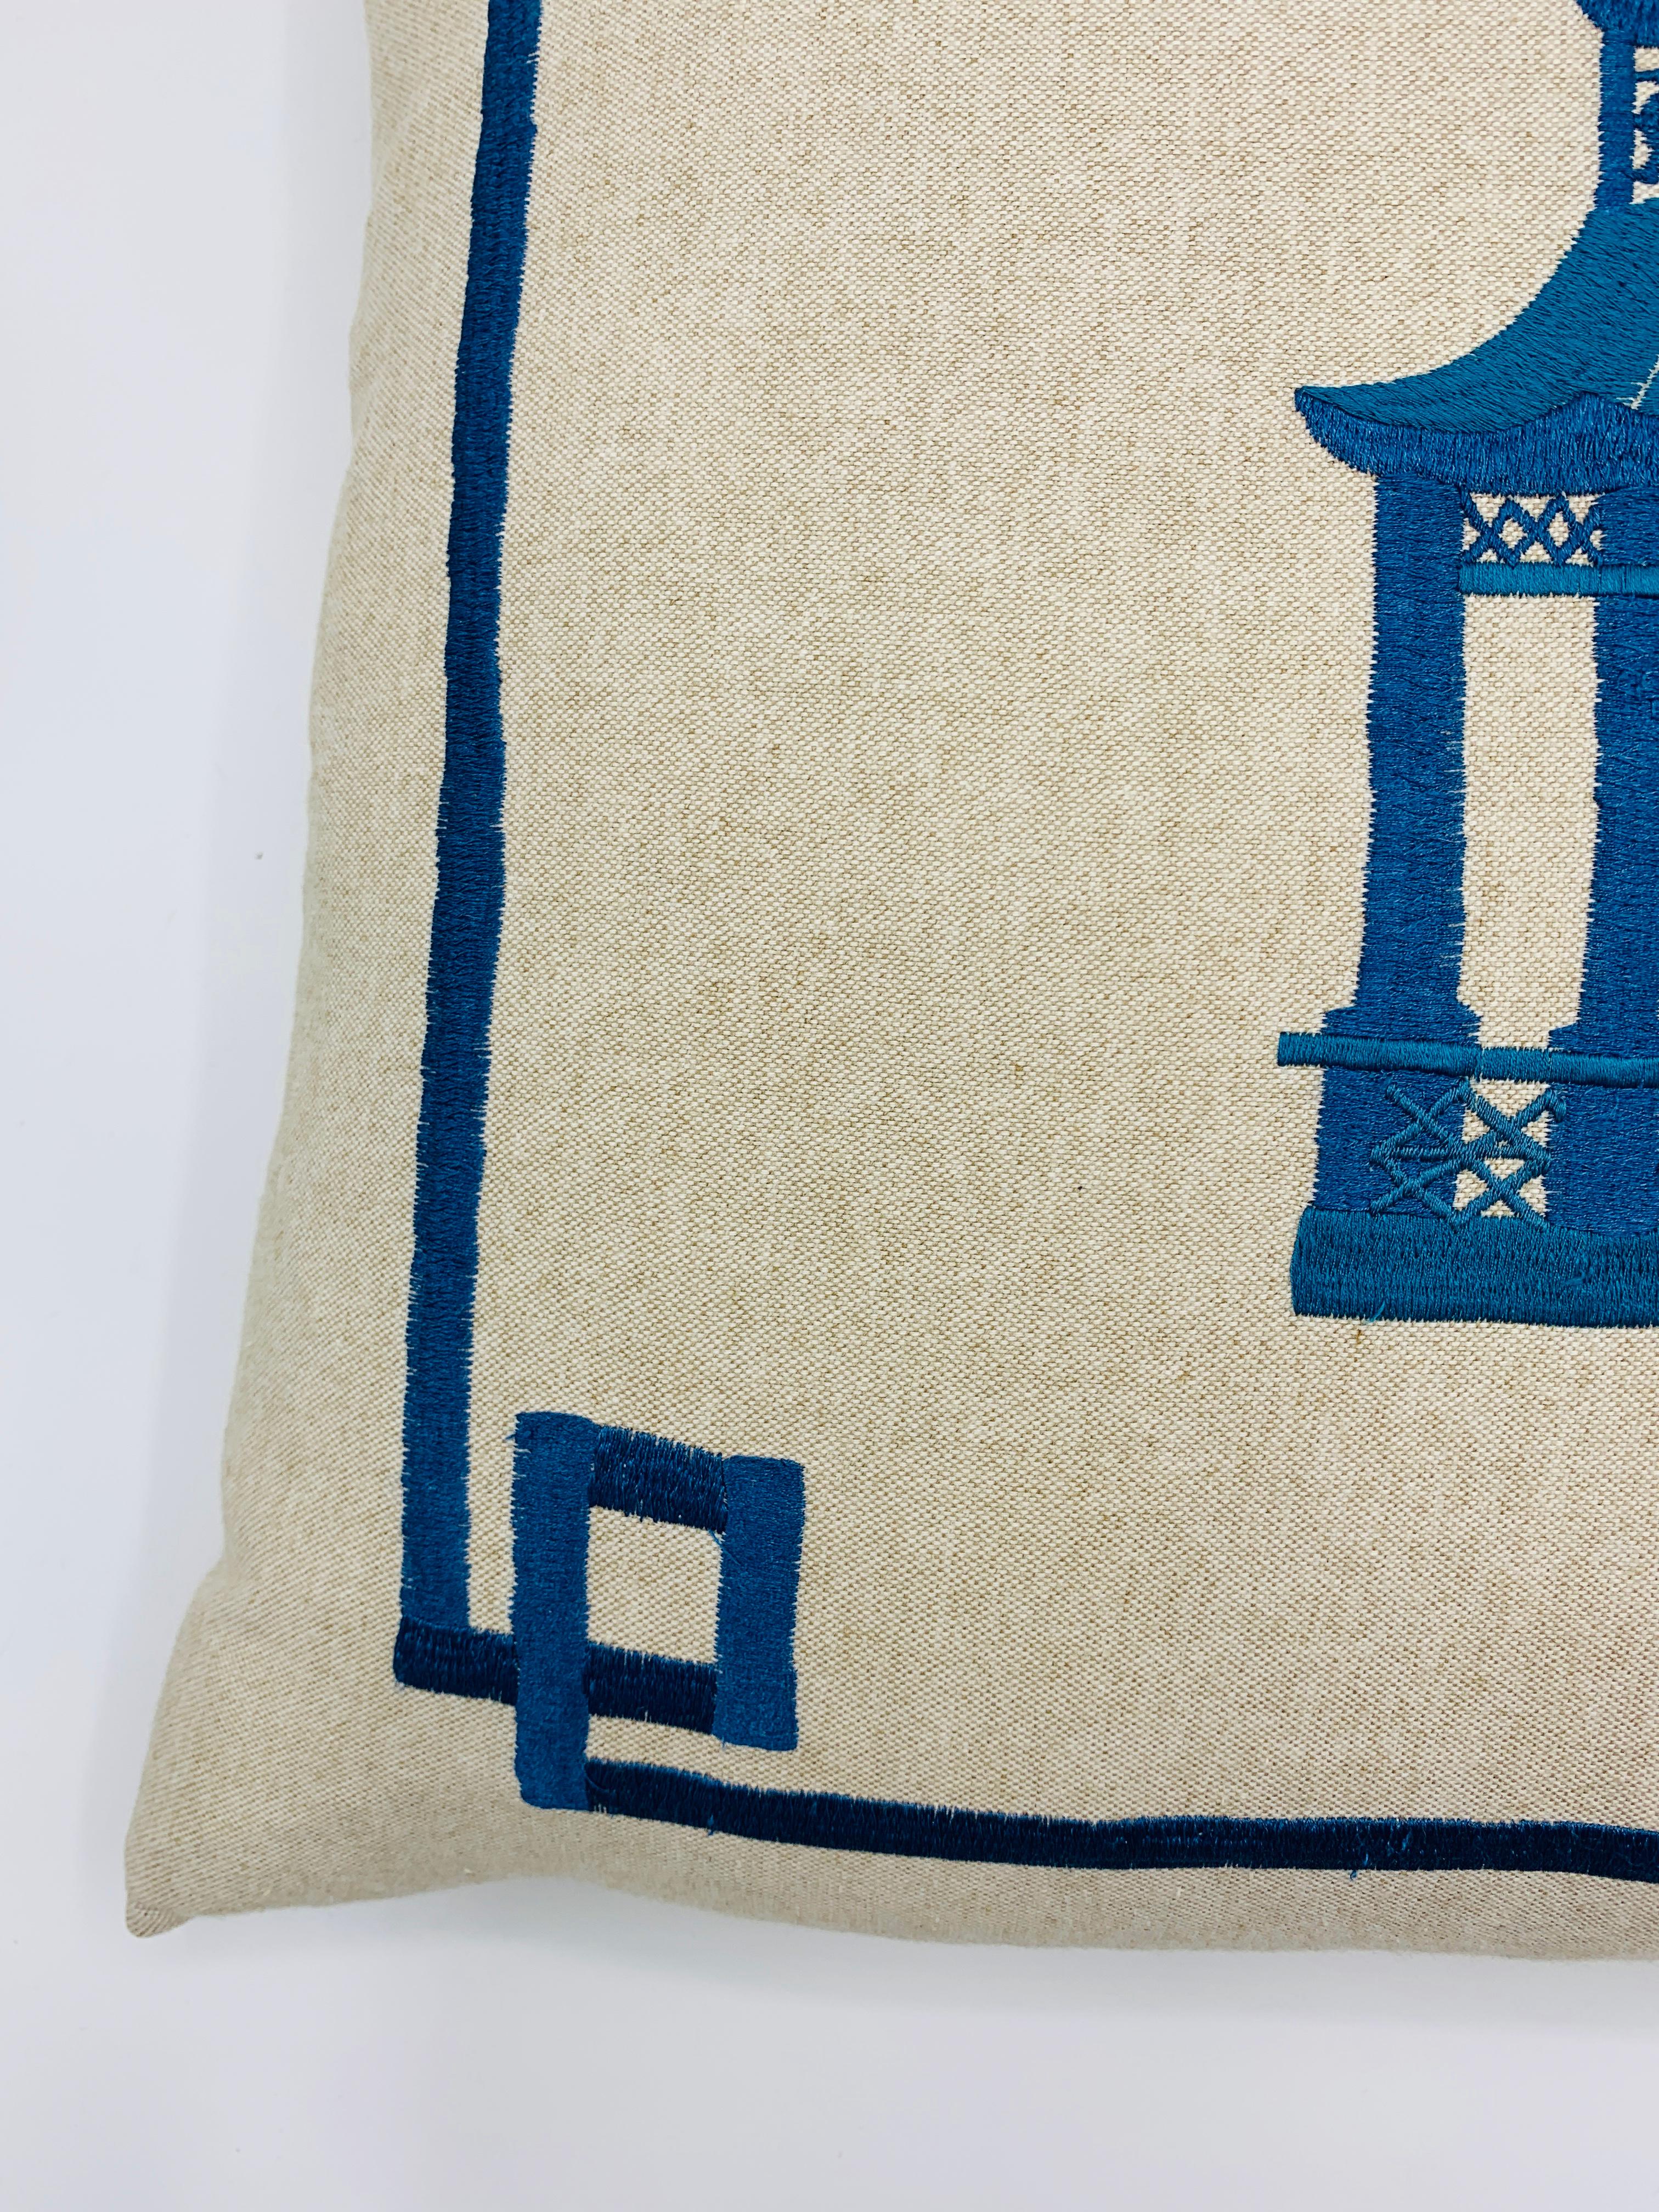 American Blue Pagoda Embroidery on Linen Pillow, Custom